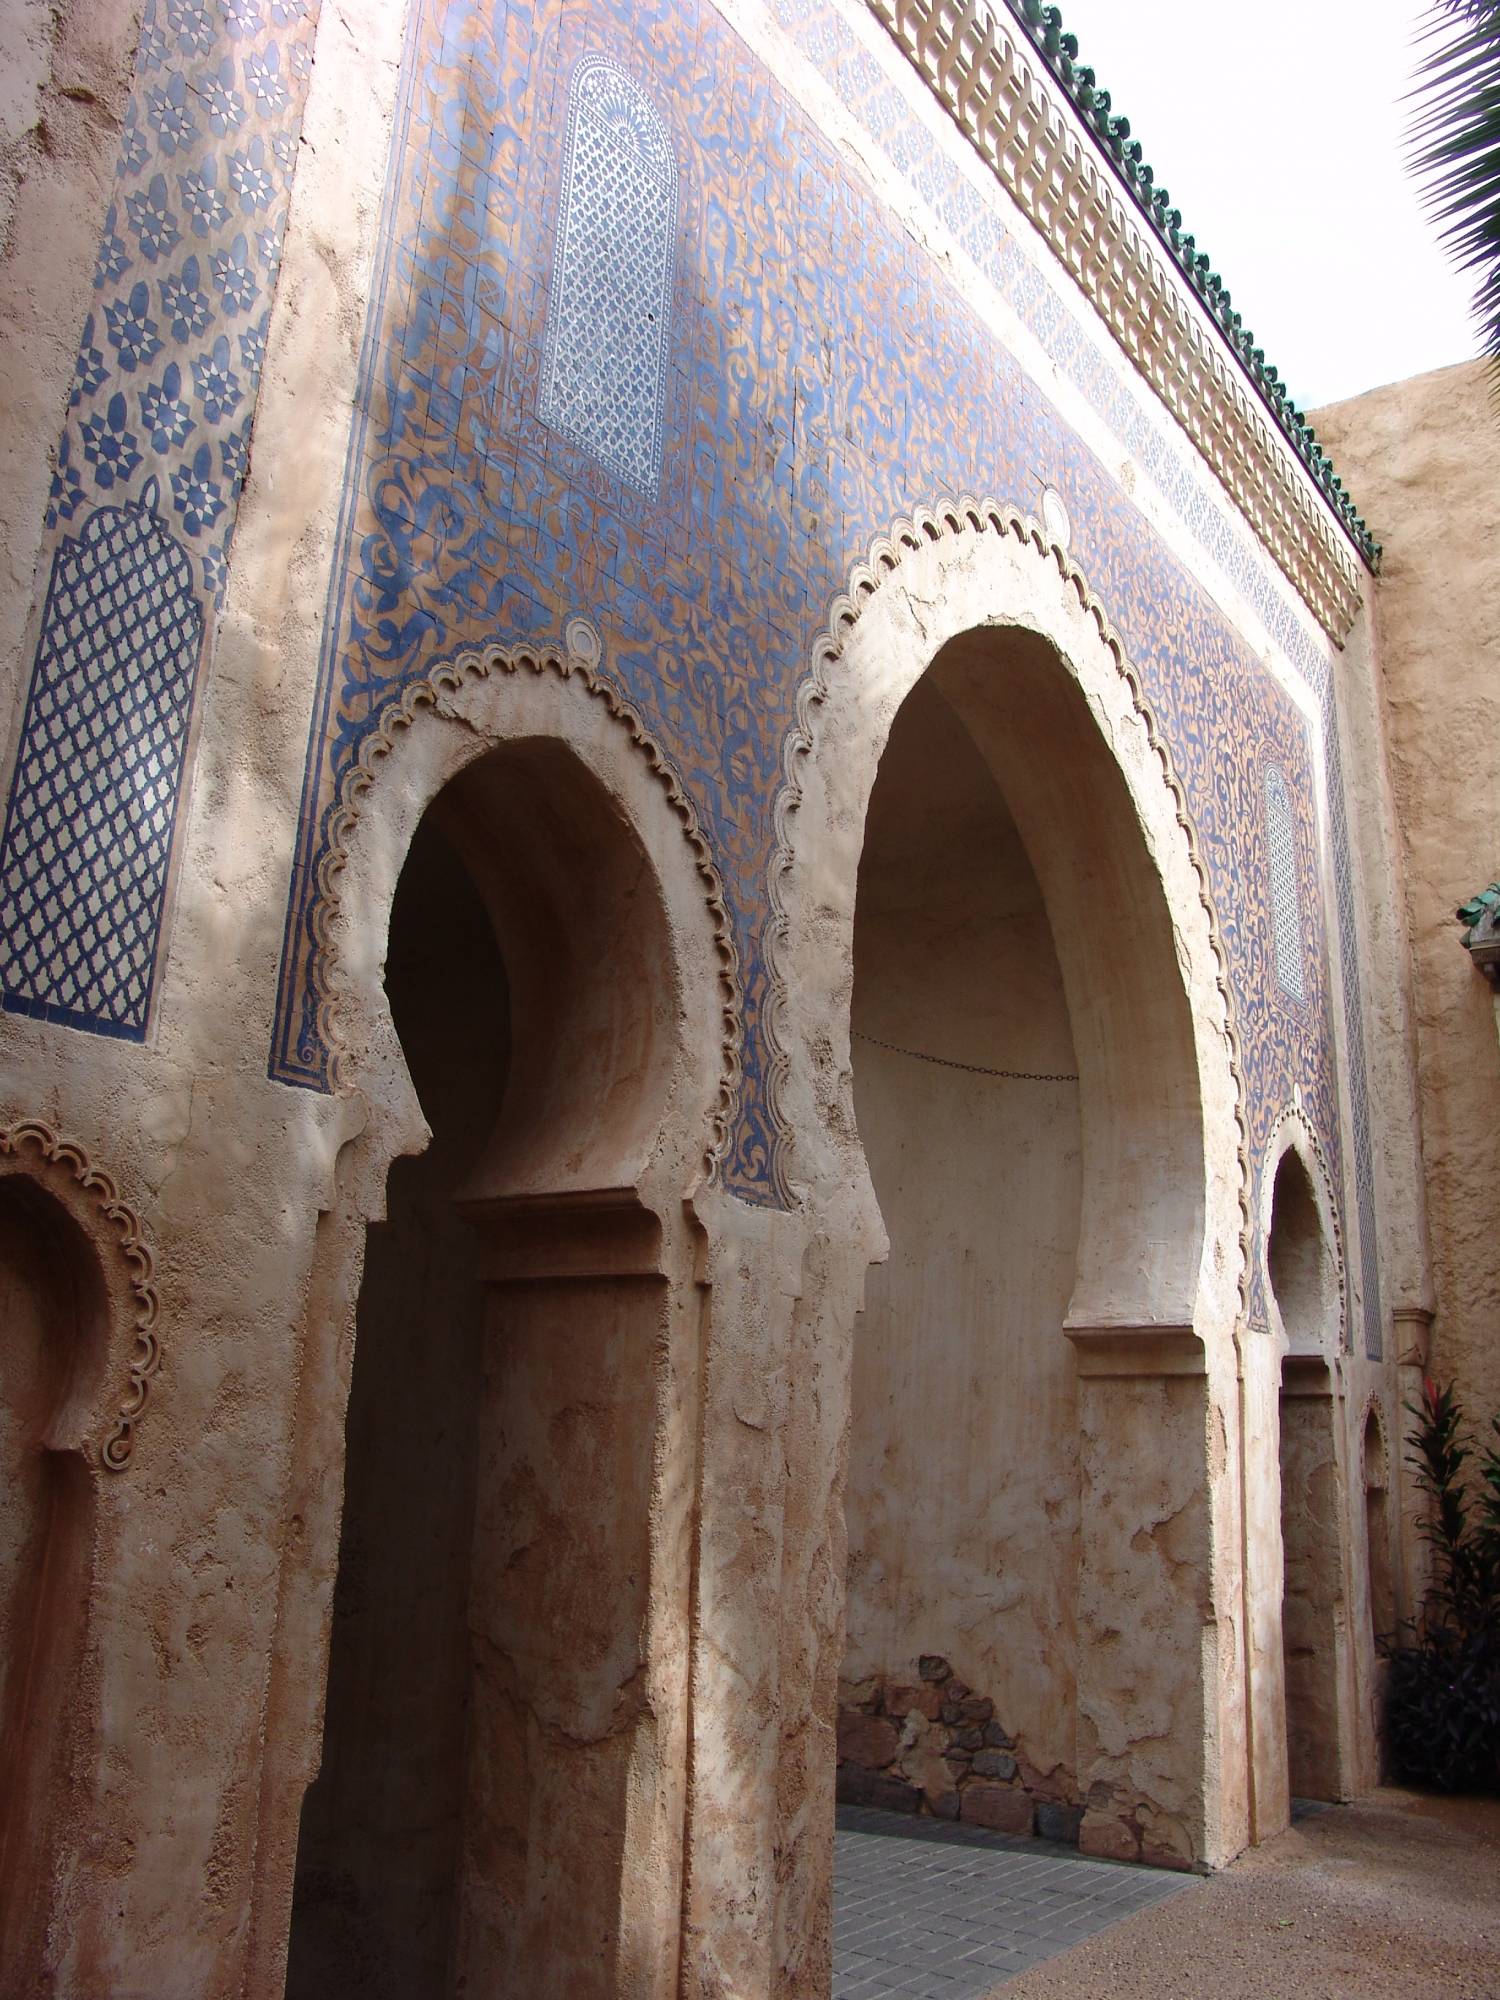 Epcot - Inside Morocco pavilion